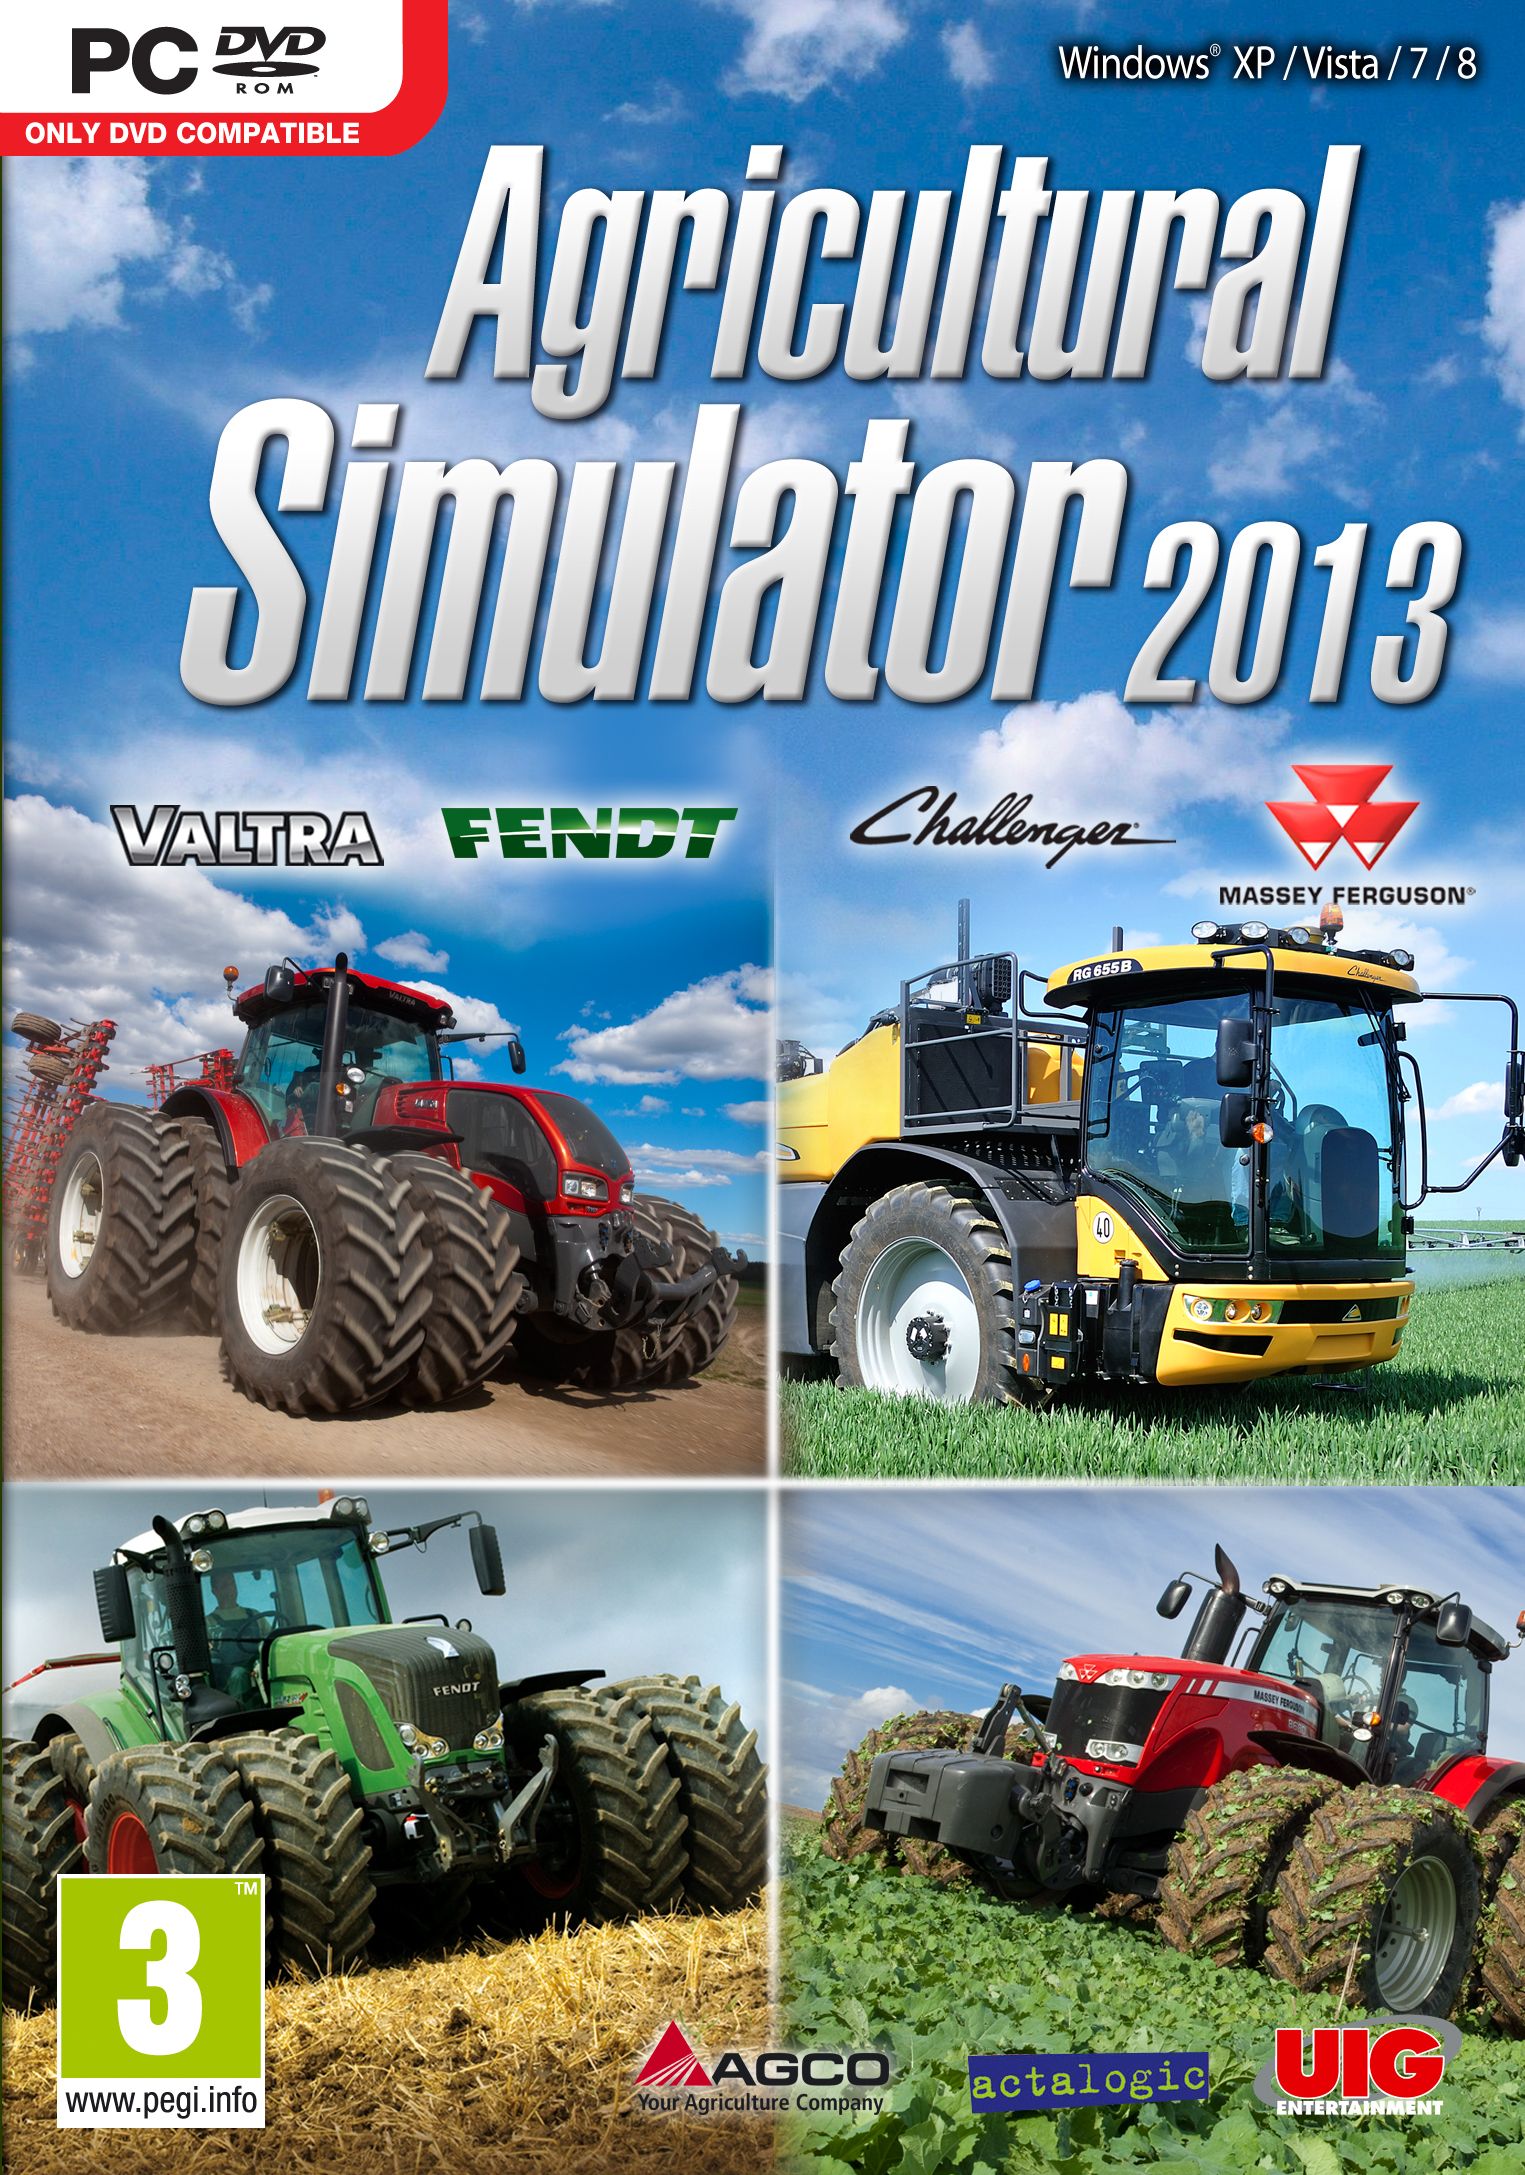 jaquette du jeu vidéo Agriculture Simulator 2013